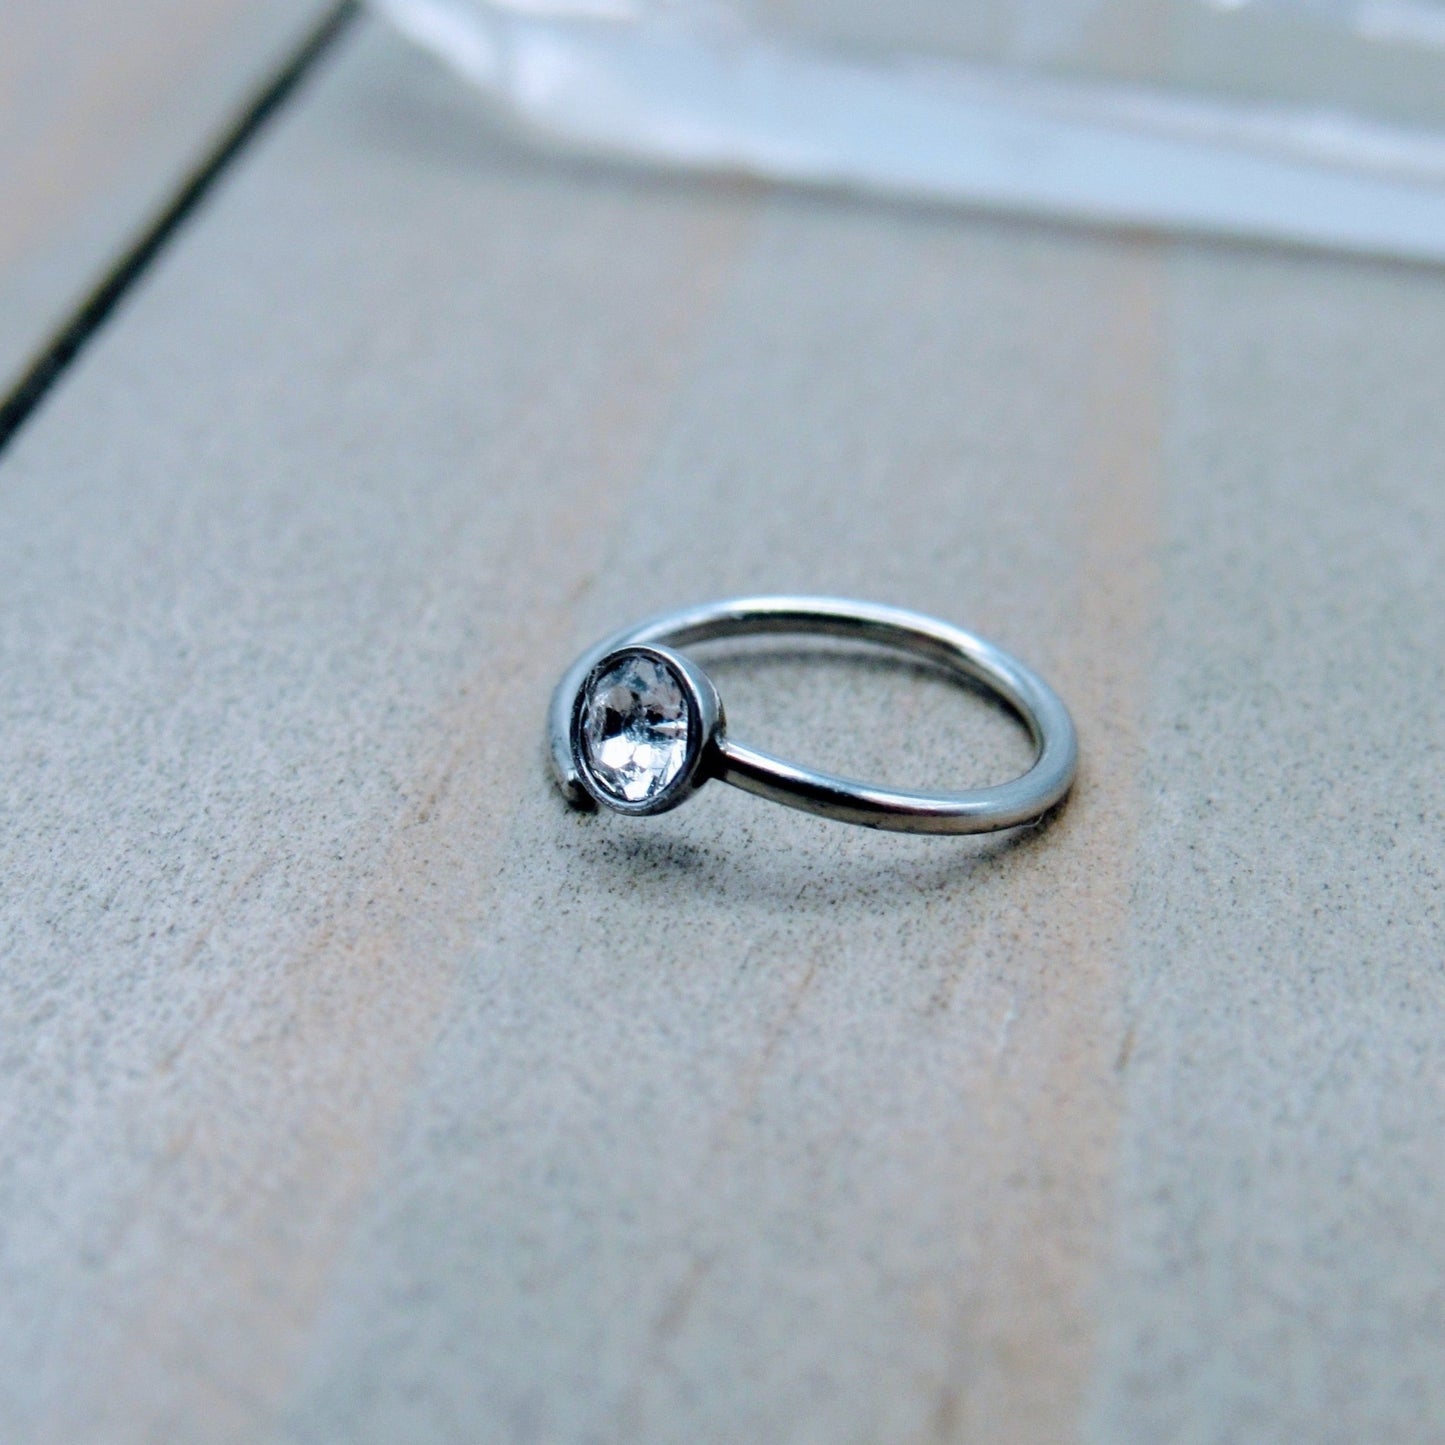 20g Nose piercing hoop silver 3mm cz bezel set gemstone helix cartilage seam ring 5/16" - Siren Body Jewelry